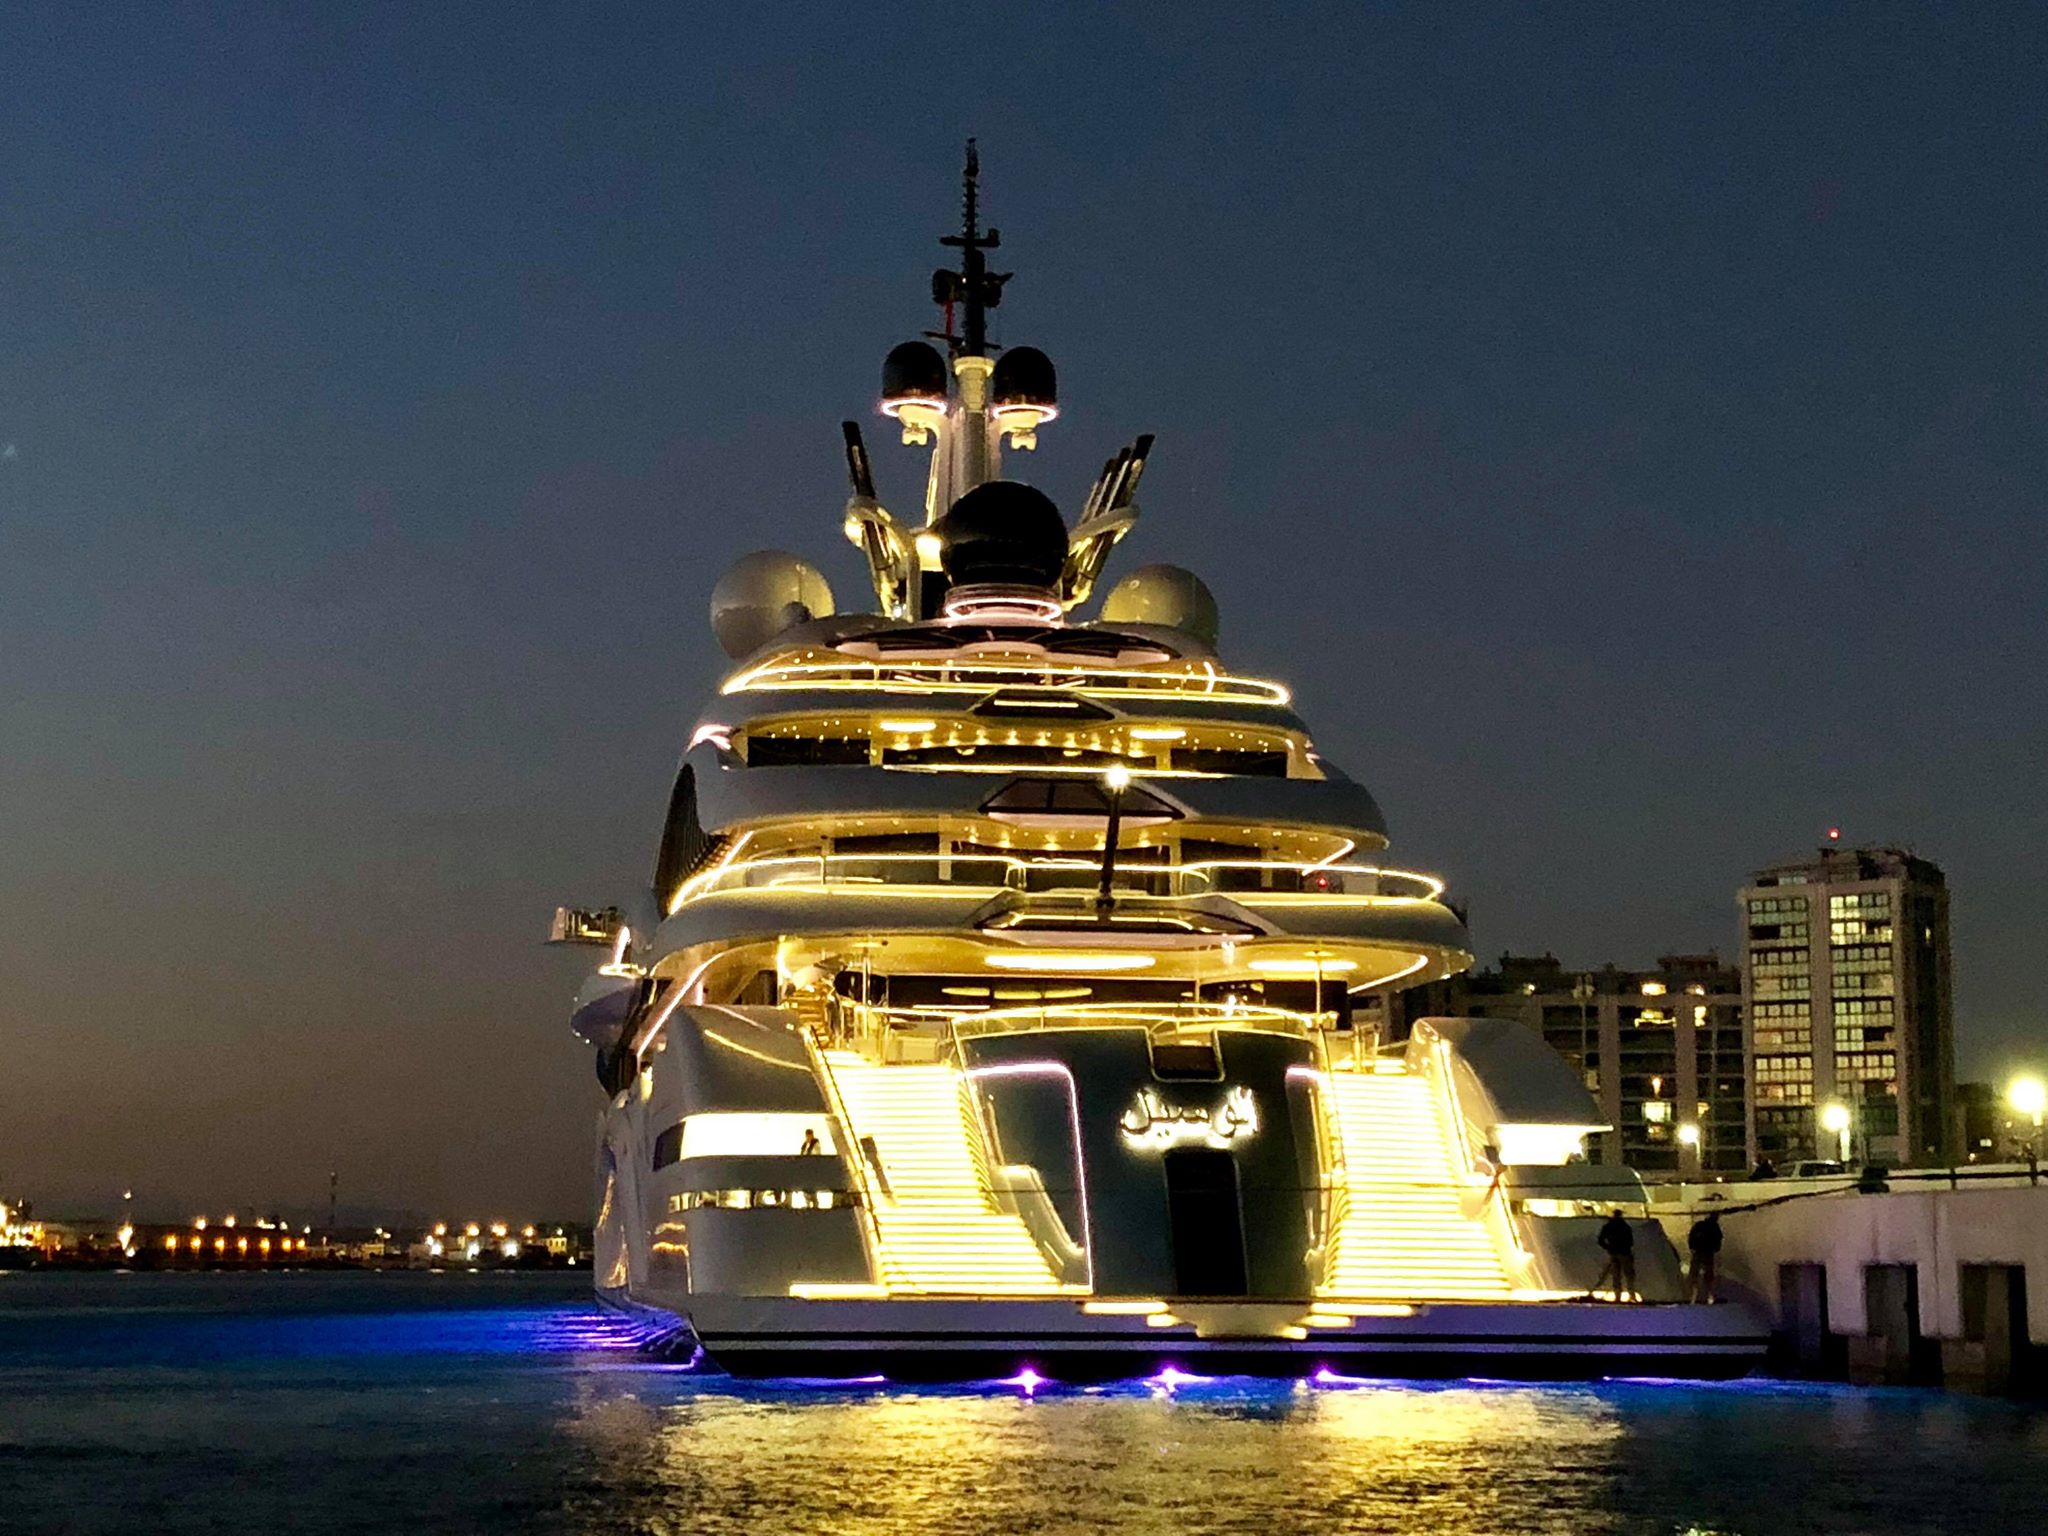 Al Lusail yacht - Lurssen - 2017 - Émir de Qatar